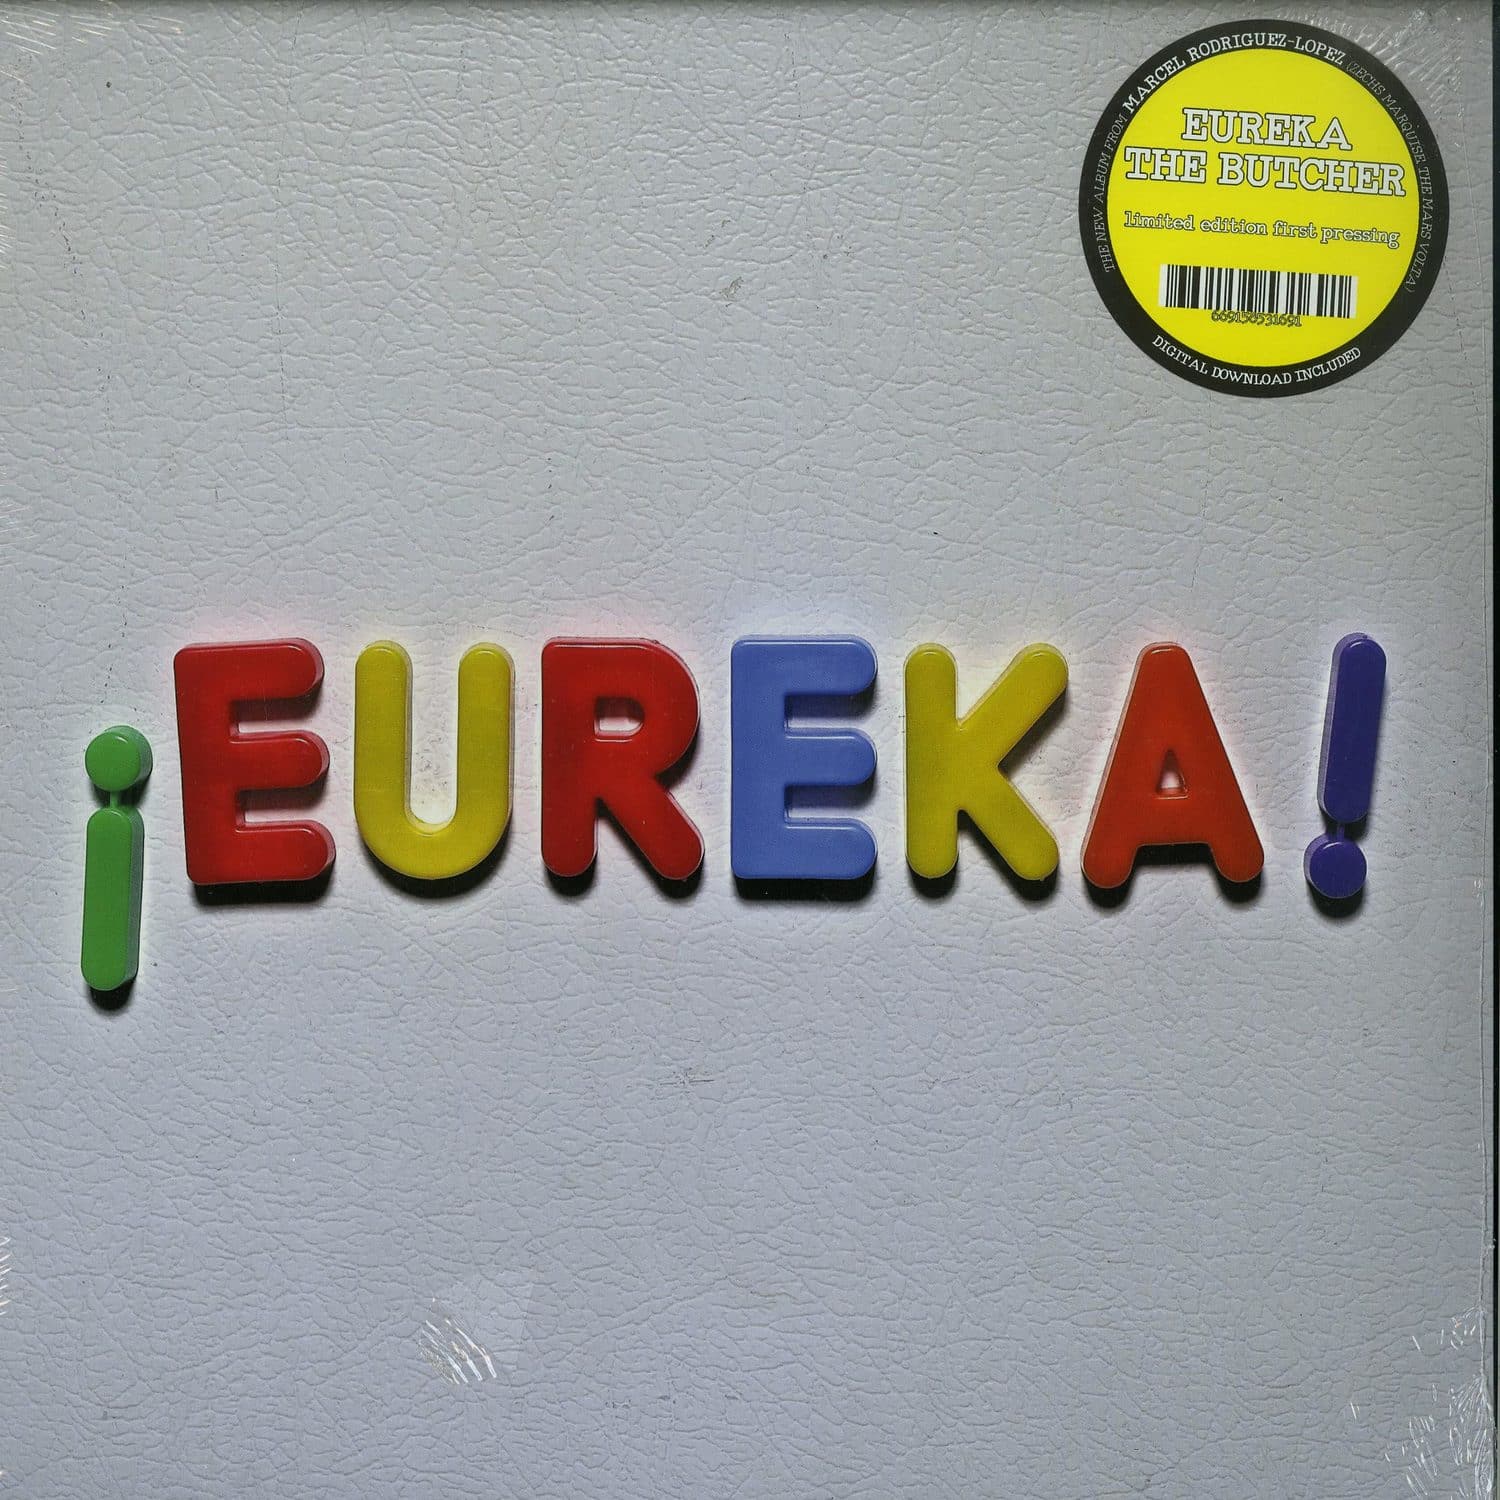 Eureka The Butcher - EUREKA 